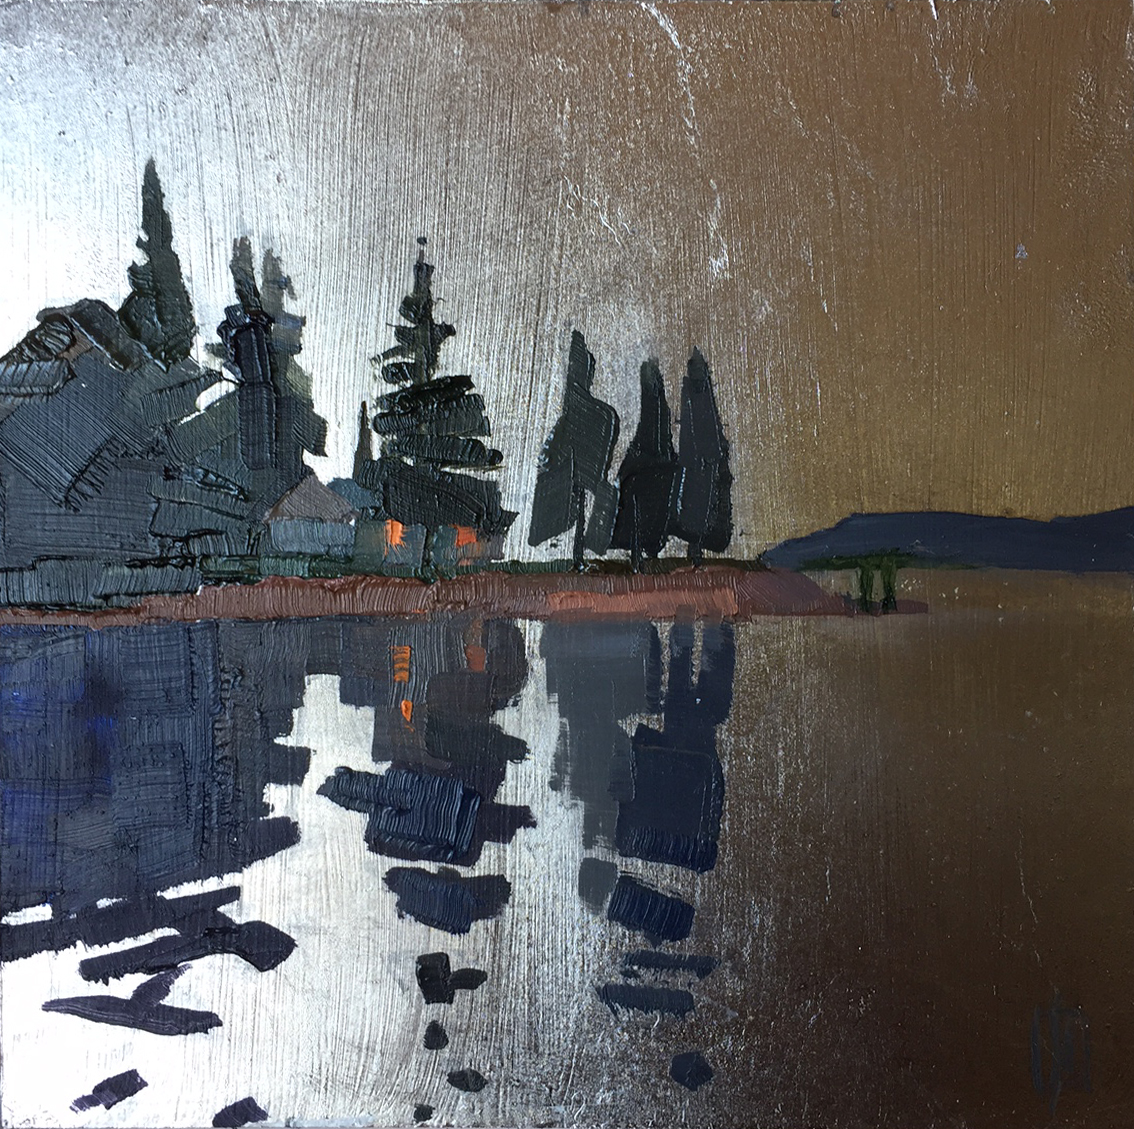   Southwest Harbor Evening  6 x 6 oil on palladium gilded panel  sold   Islesford Artists Gallery  